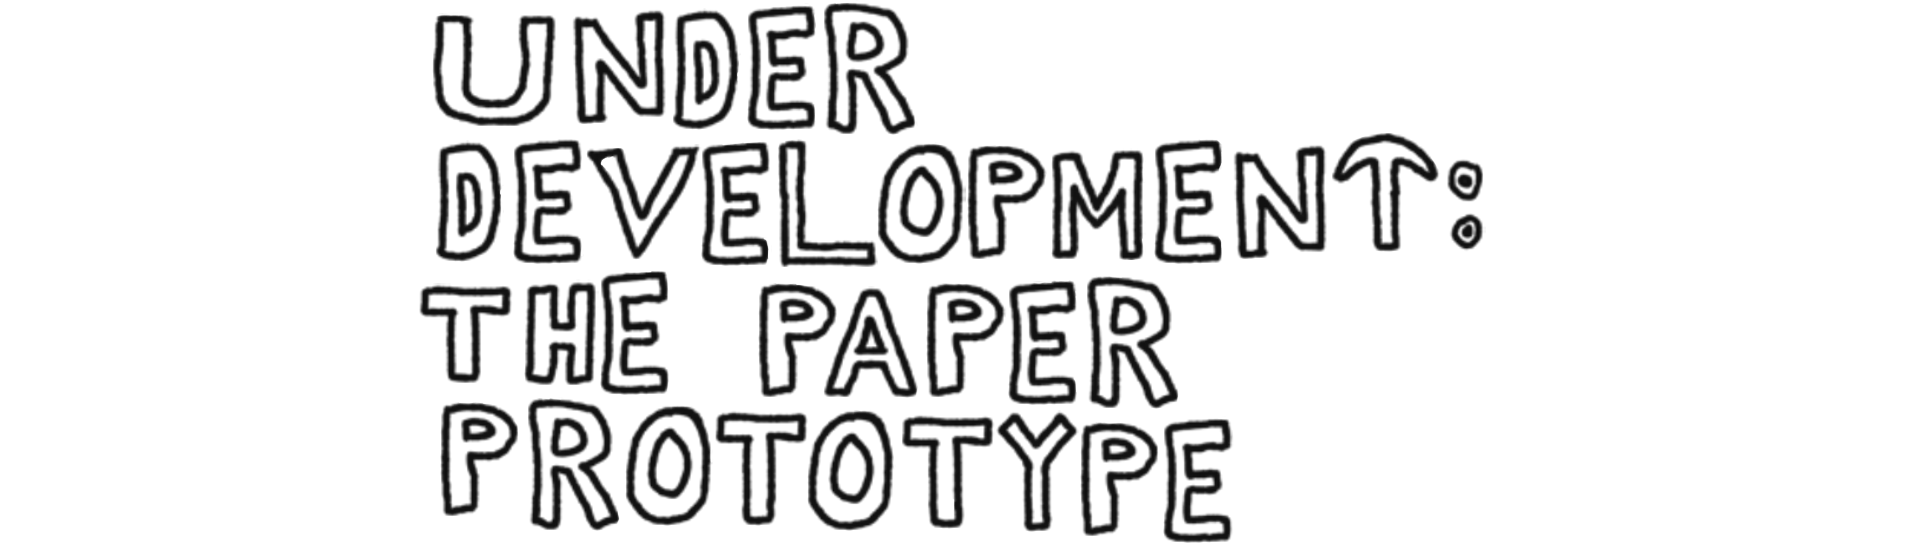 Underdevelopment 2: The Paper Prototype